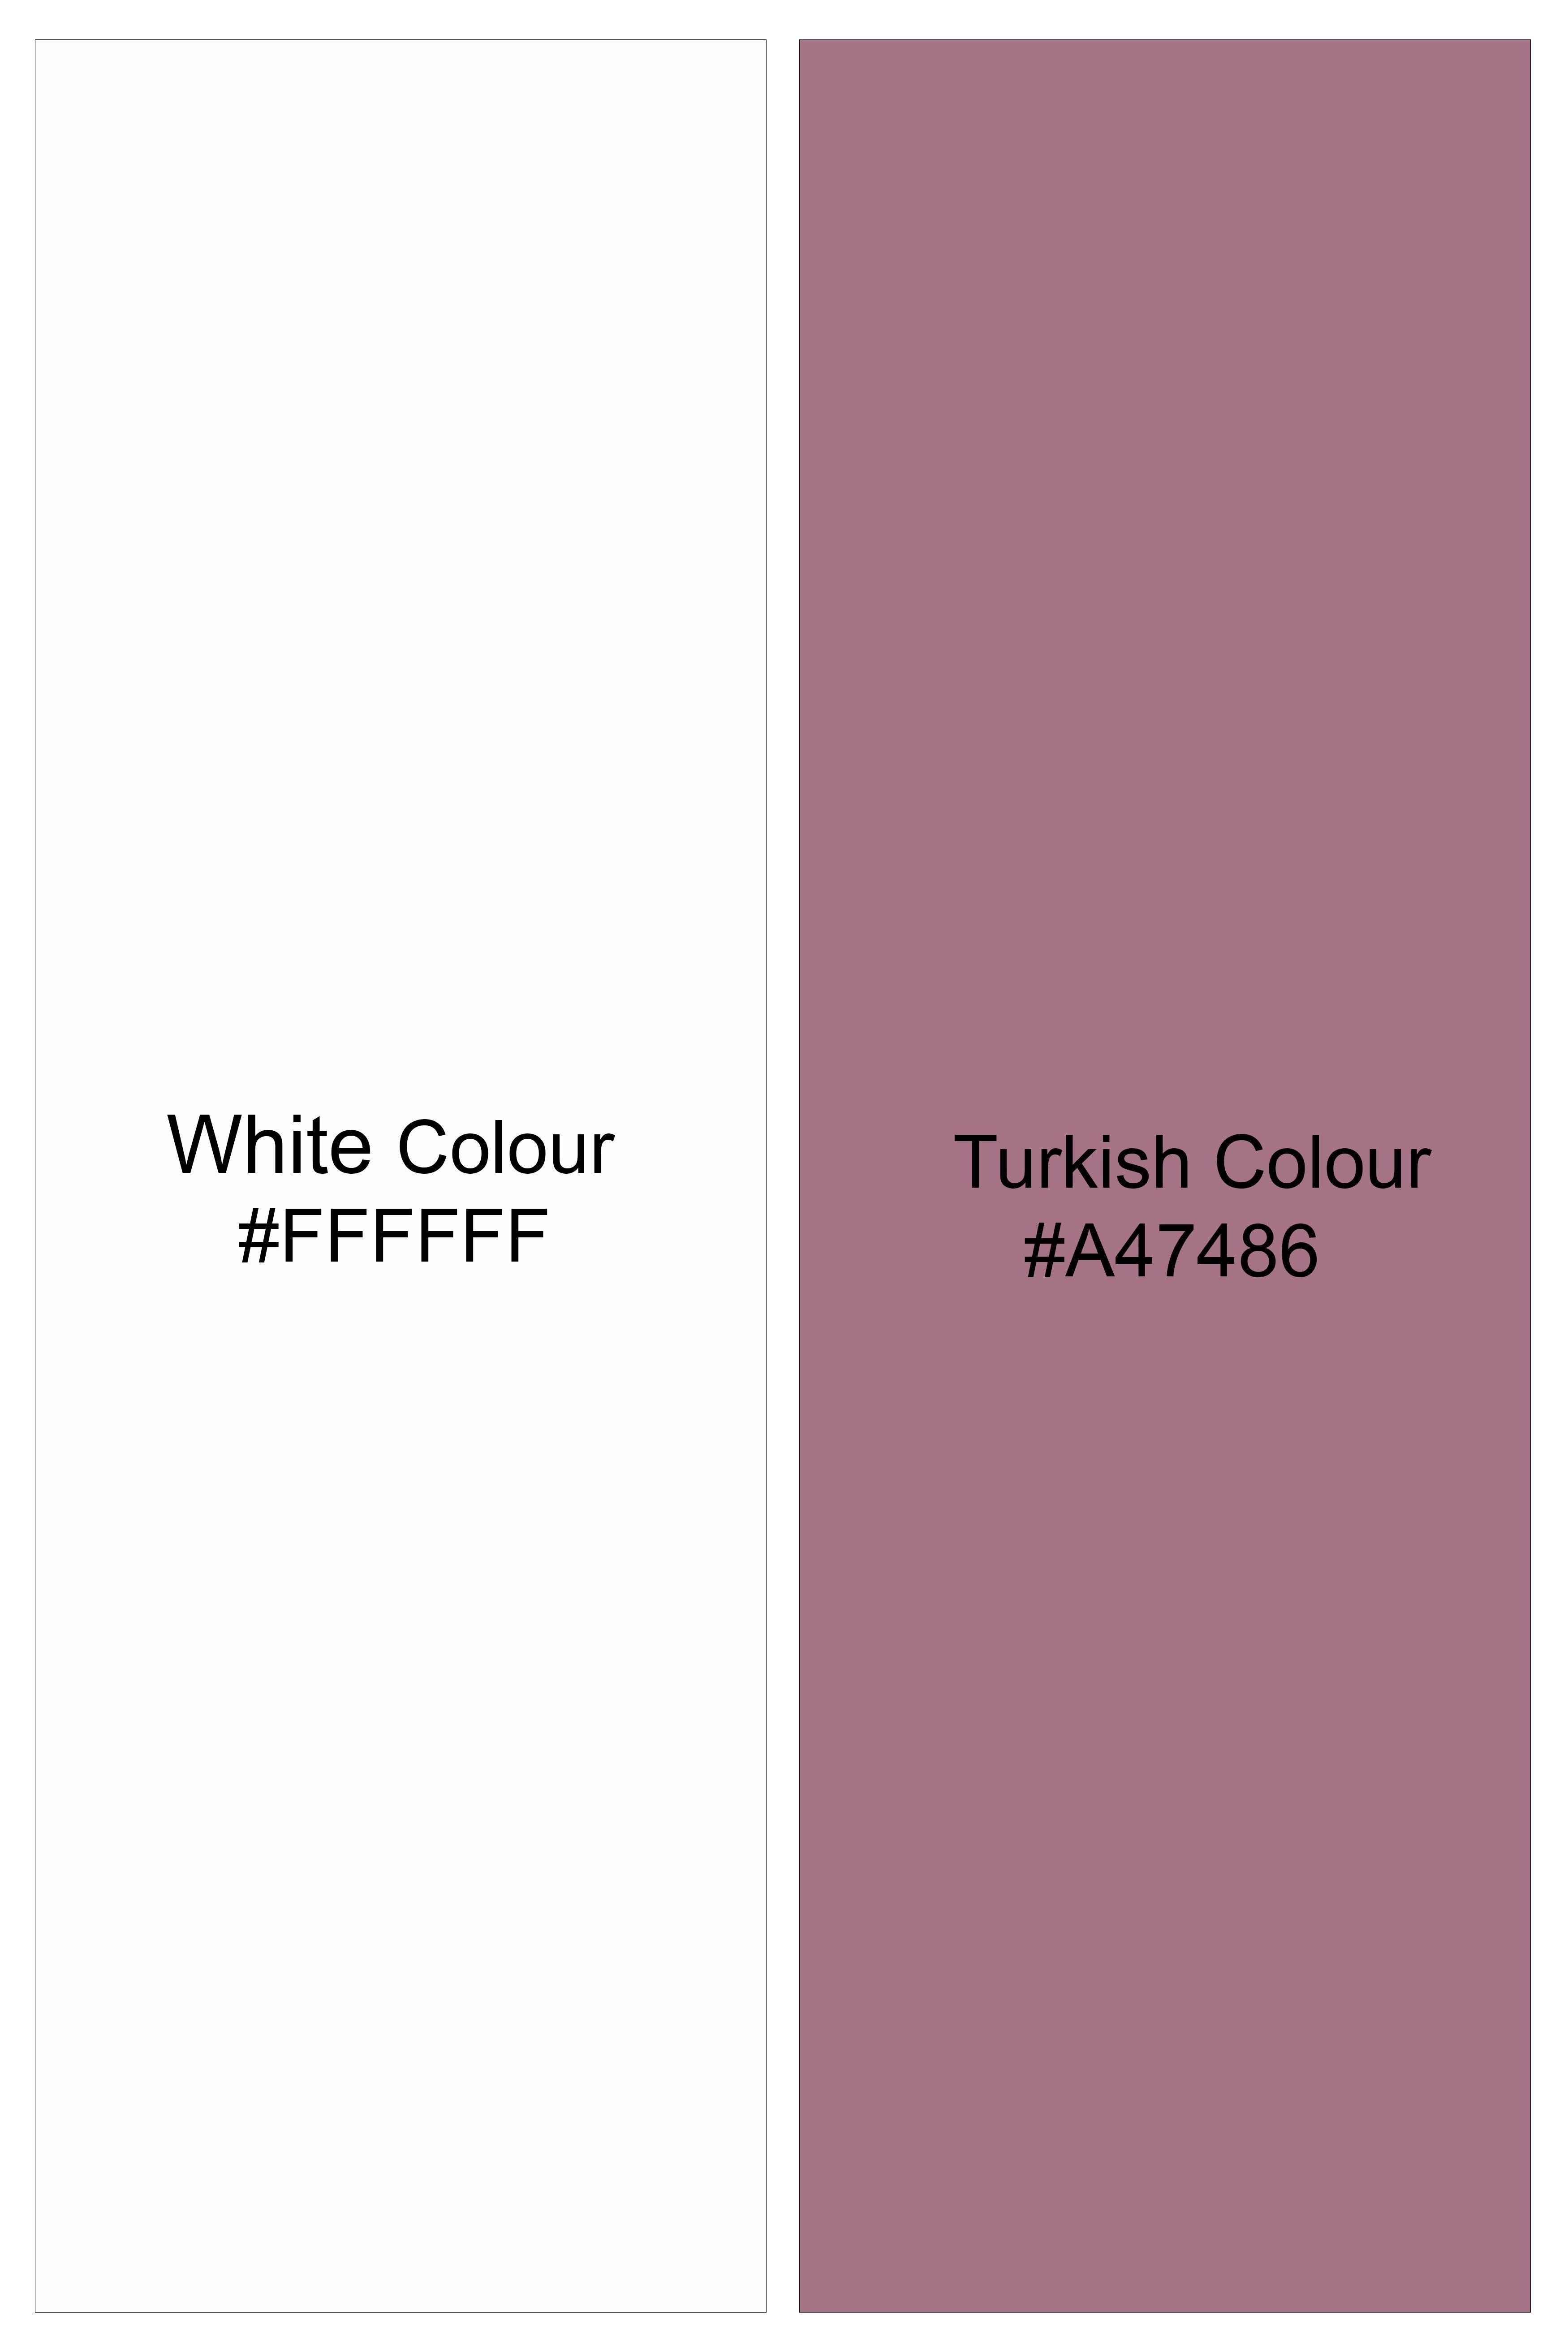 Bright White with Turkish Pink Horizontal Striped Oxford Cotton Shirt